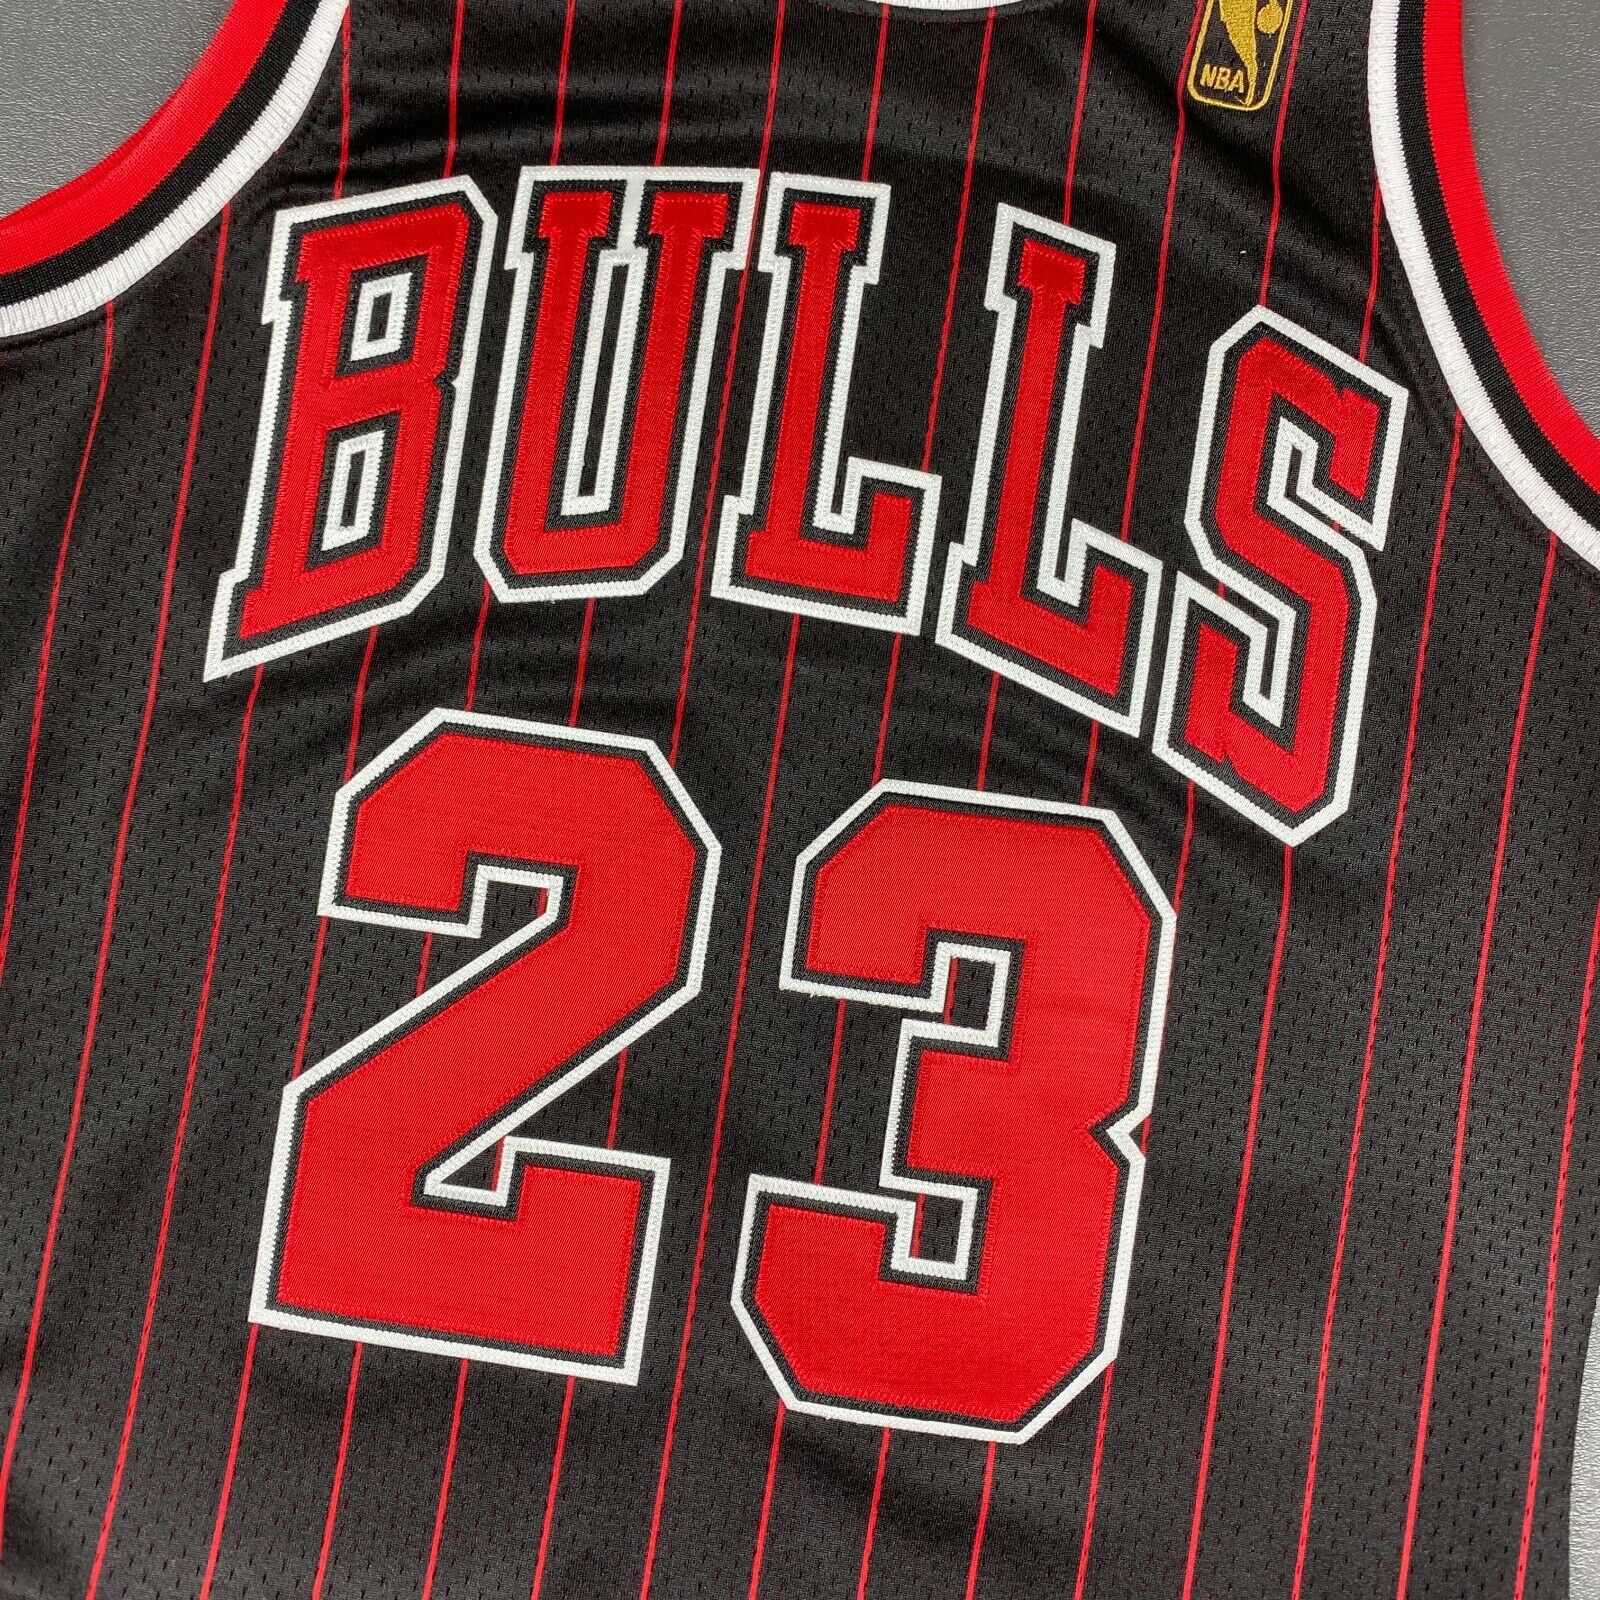 Mitchell & Ness Michael Jordan Chicago Bulls Cement Crack Pattern Hardwood Classics 96-97 Authentic Jersey by Devious Elements App 2XL